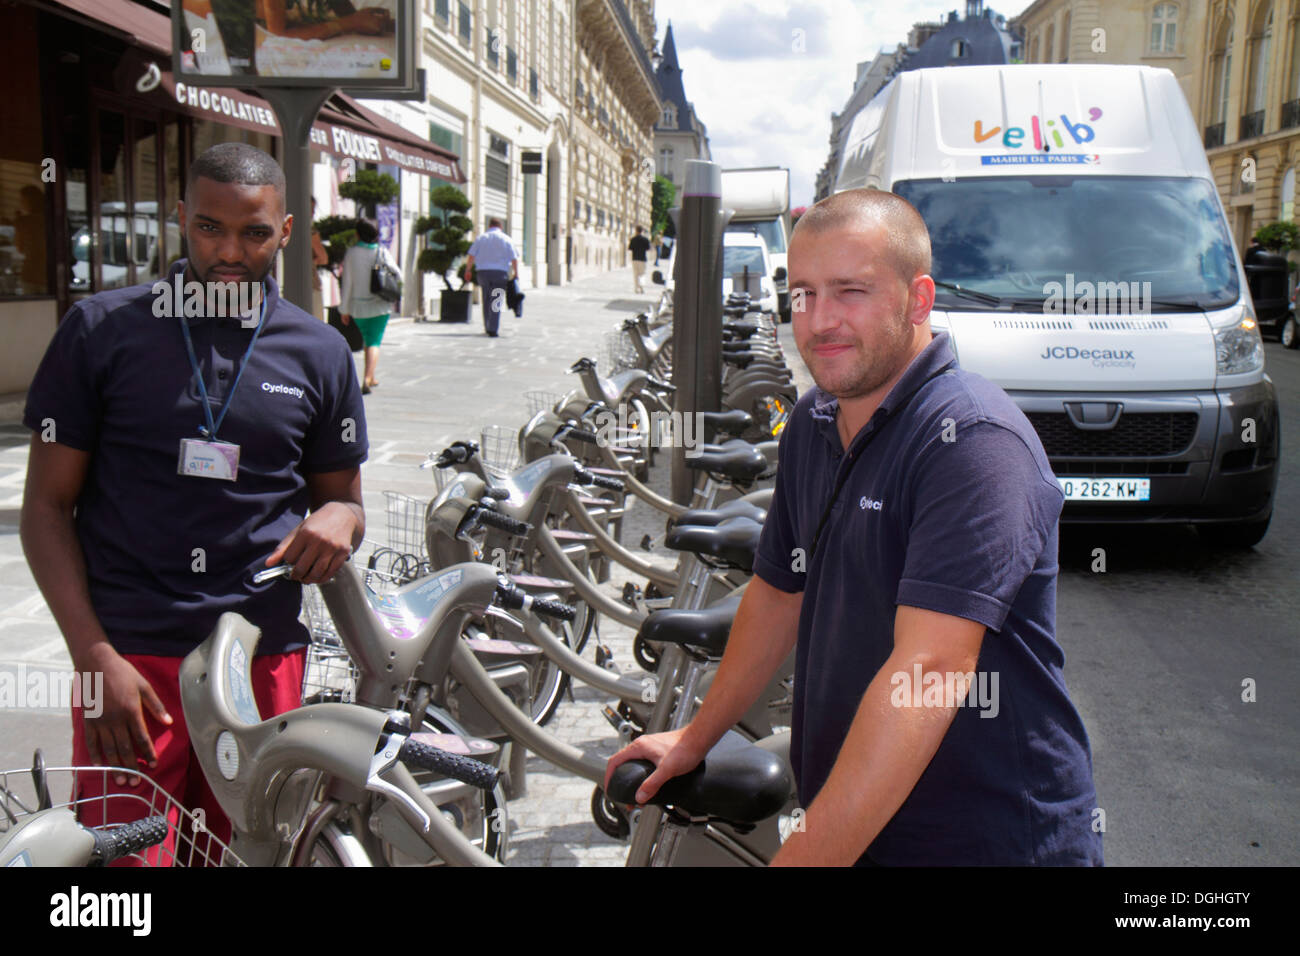 Paris France,8th arrondissement,Rue François,Velib bike share system,employees,employee worker workers working staff,Black man men male,France13081904 Stock Photo